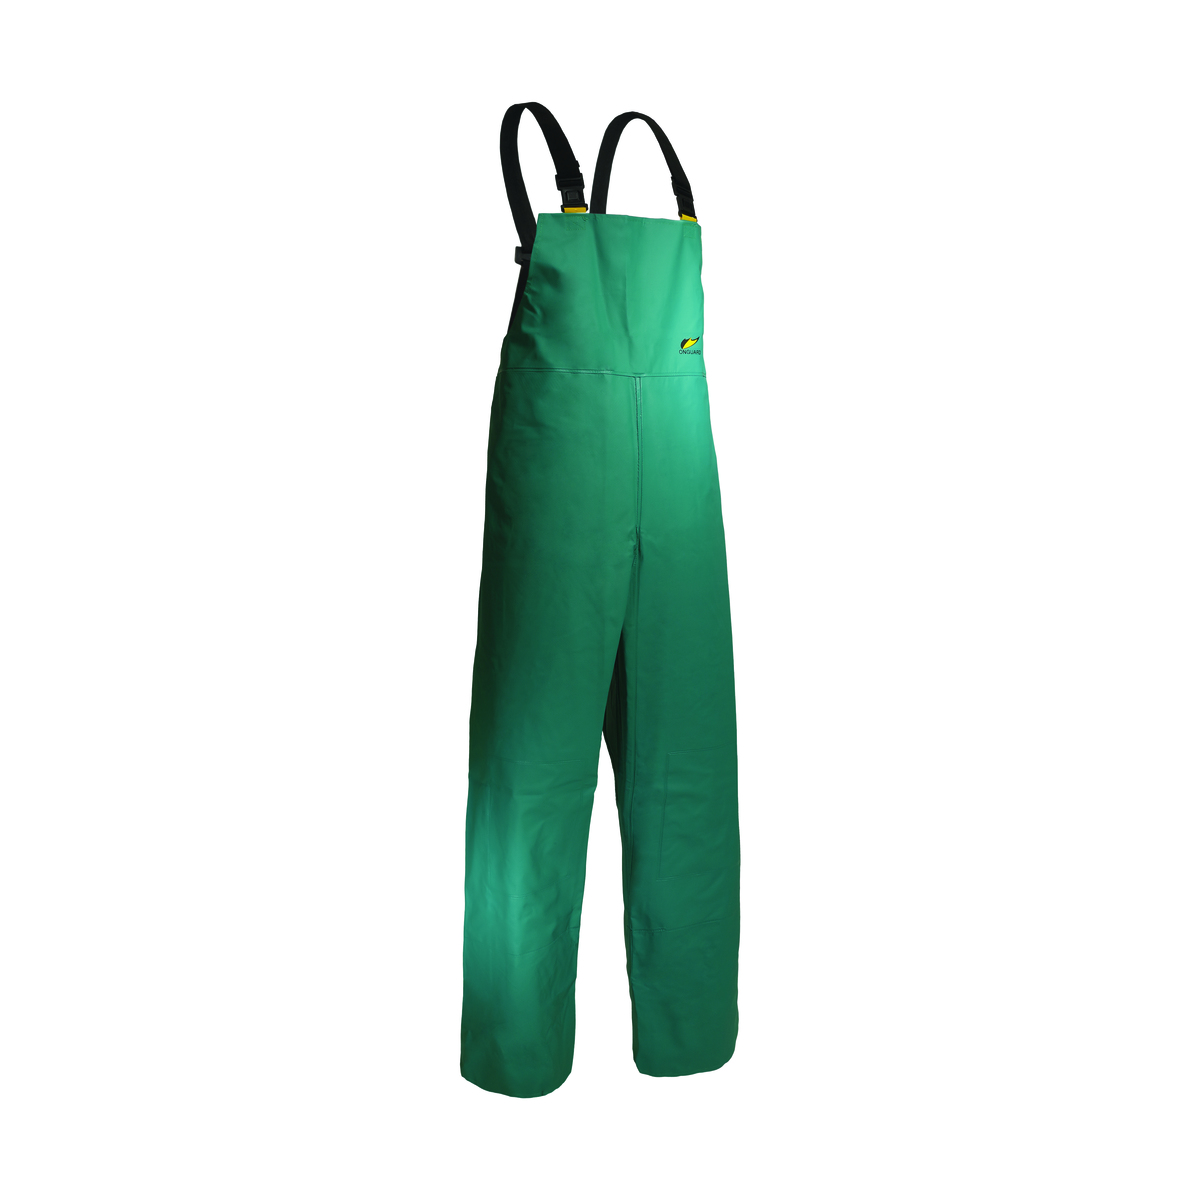 Dunlop® Protective Footwear 3X Green Chemtex .42 mm PVC On Nylon Polyester Bib Pants